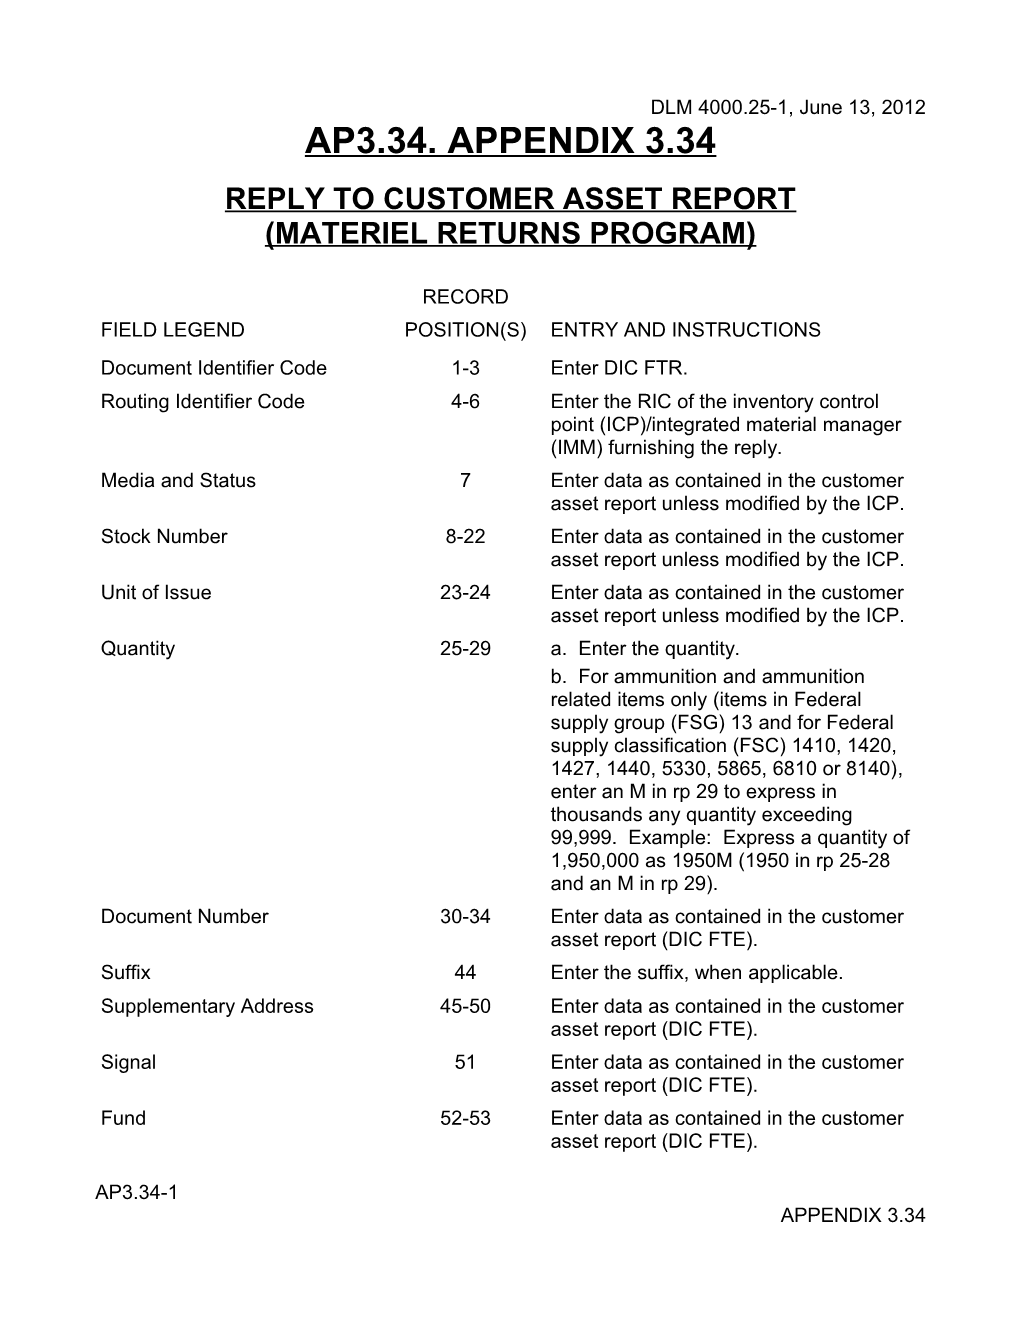 Appendix 3.34 - Reply to Customer Asset Report (Materiel Returns Program)